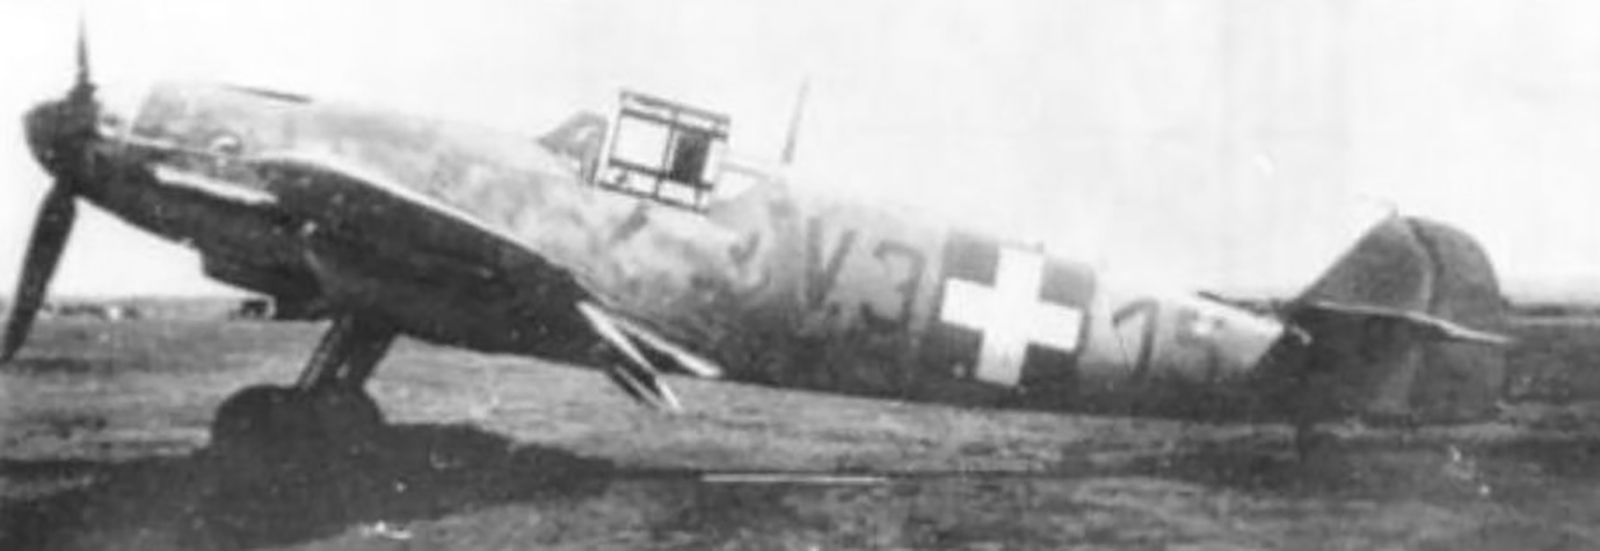 Messerschmitt Bf 109F RHAF 101.1 V3+15 Debrody Hungary 1942 0A